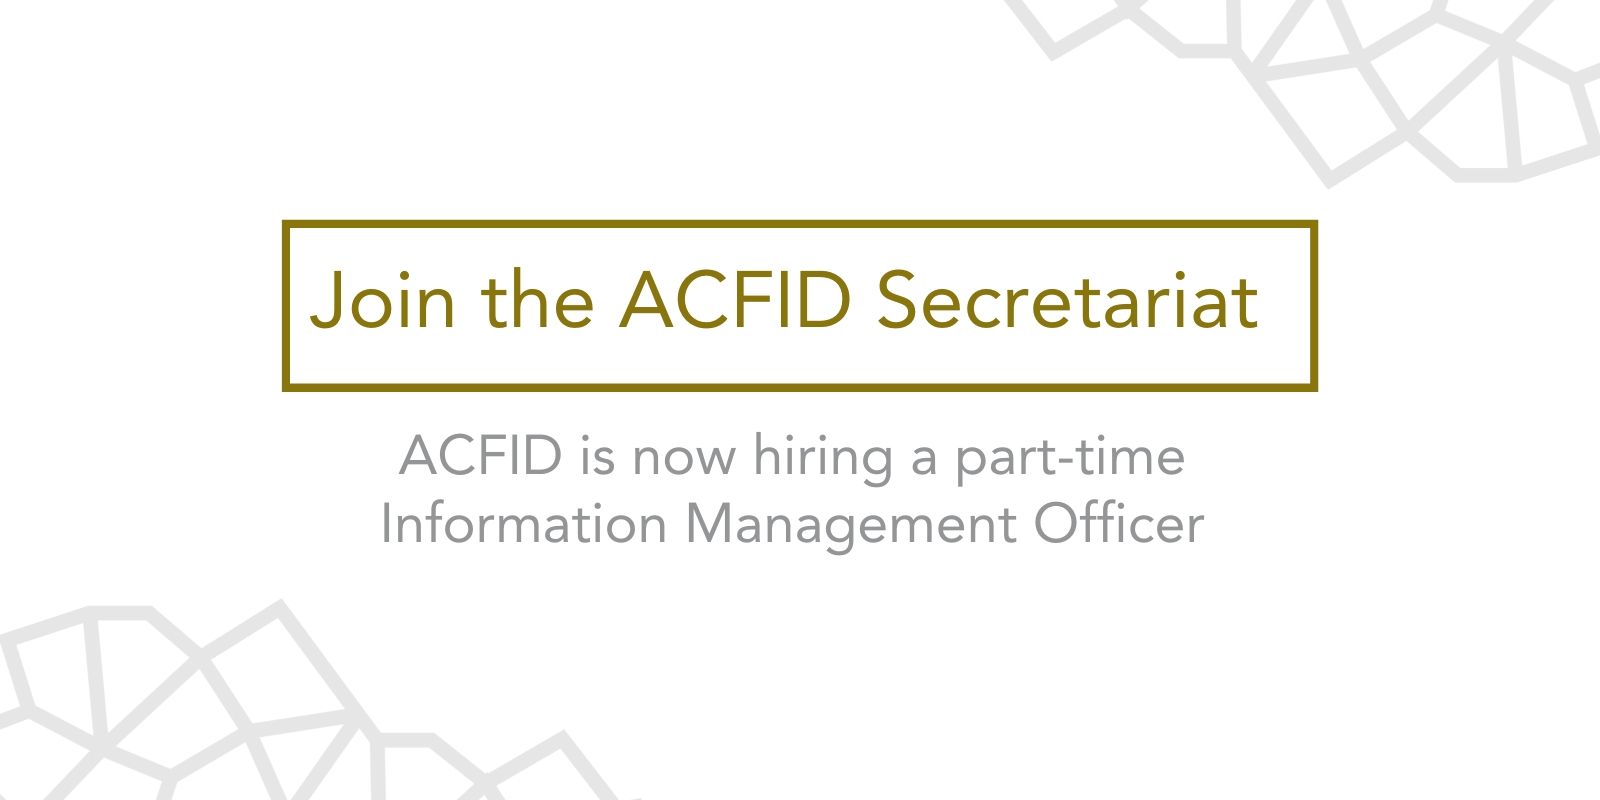 Join the ACFID Secretariat: Now hiring an Information Management Officer